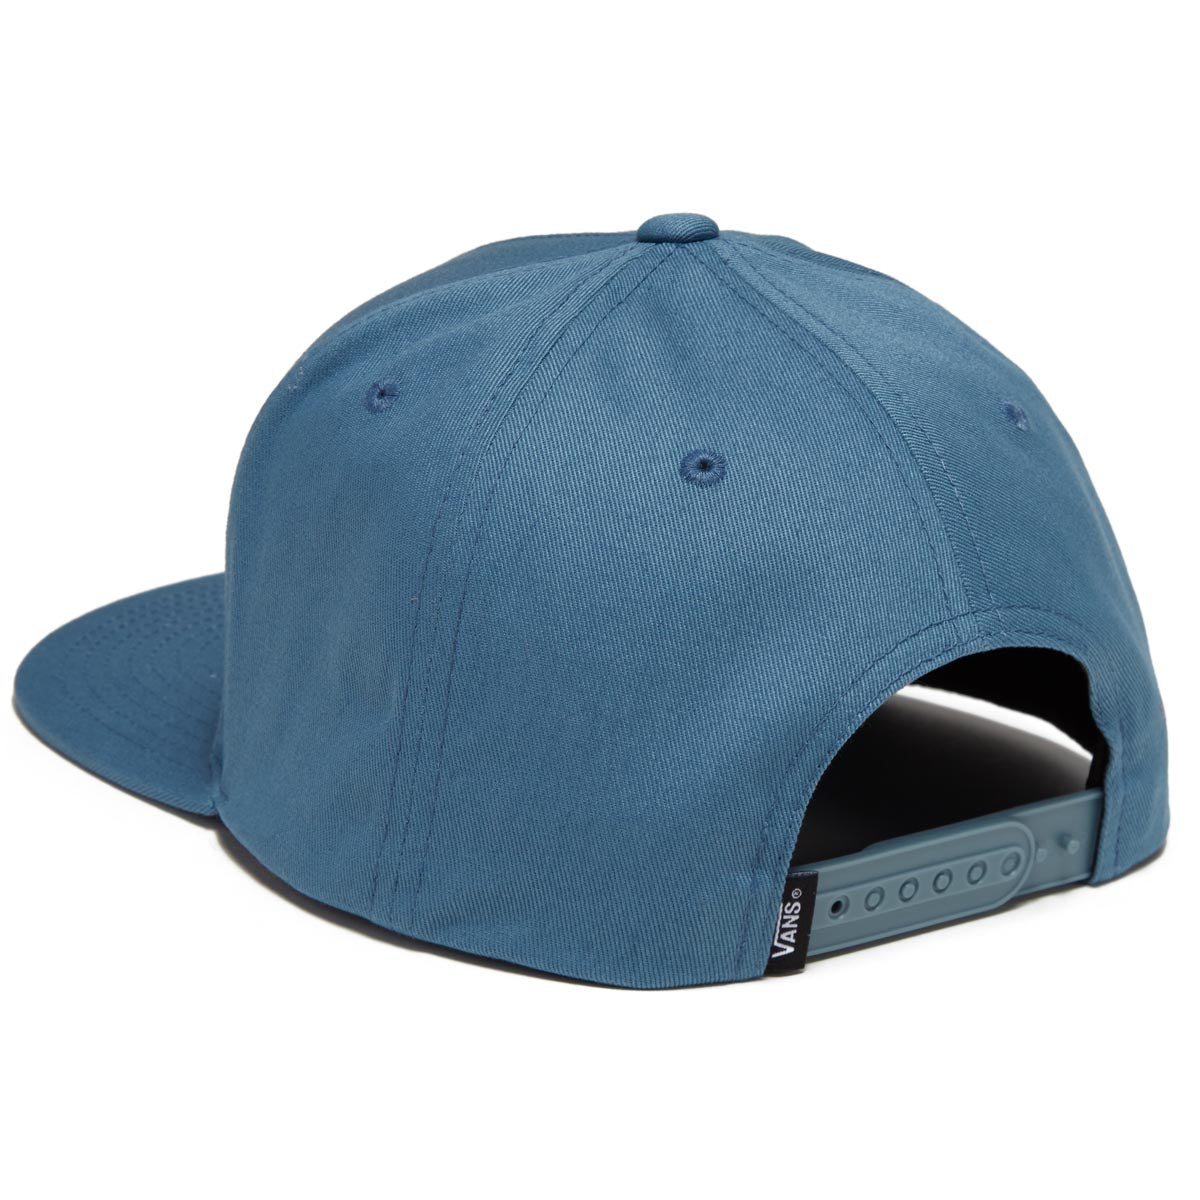 Vans Quoted Snapback Hat - Copen Blue image 2